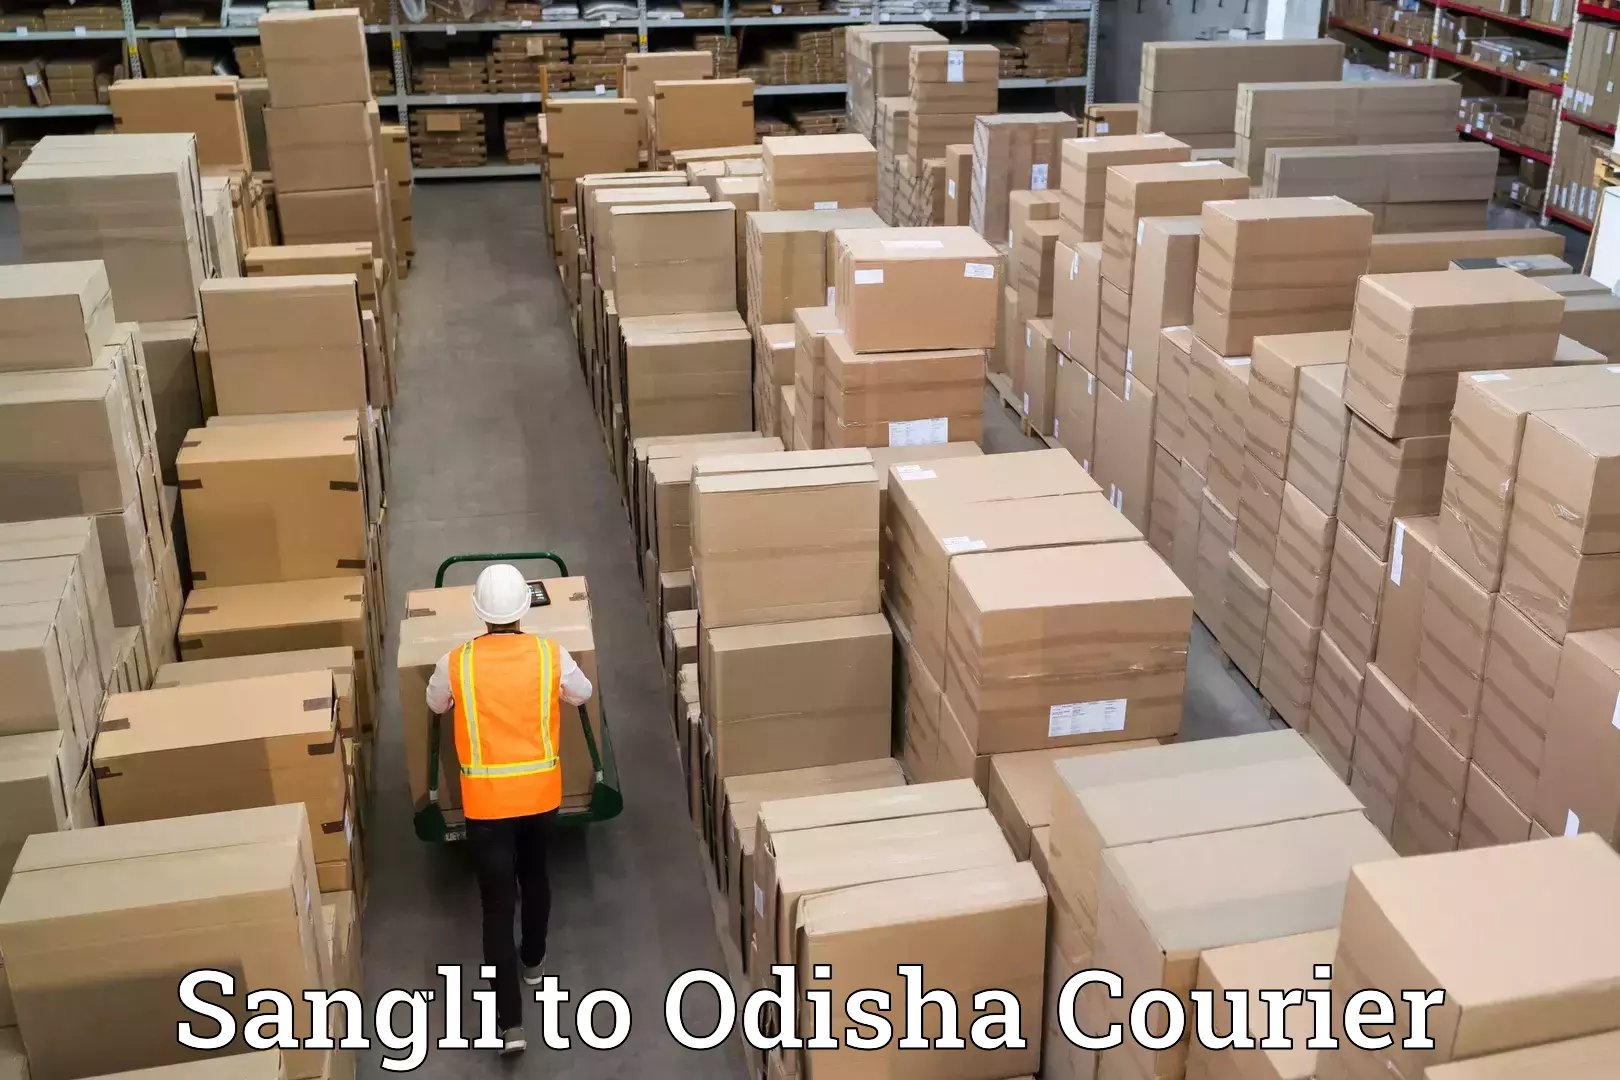 Moving and packing experts Sangli to Odisha